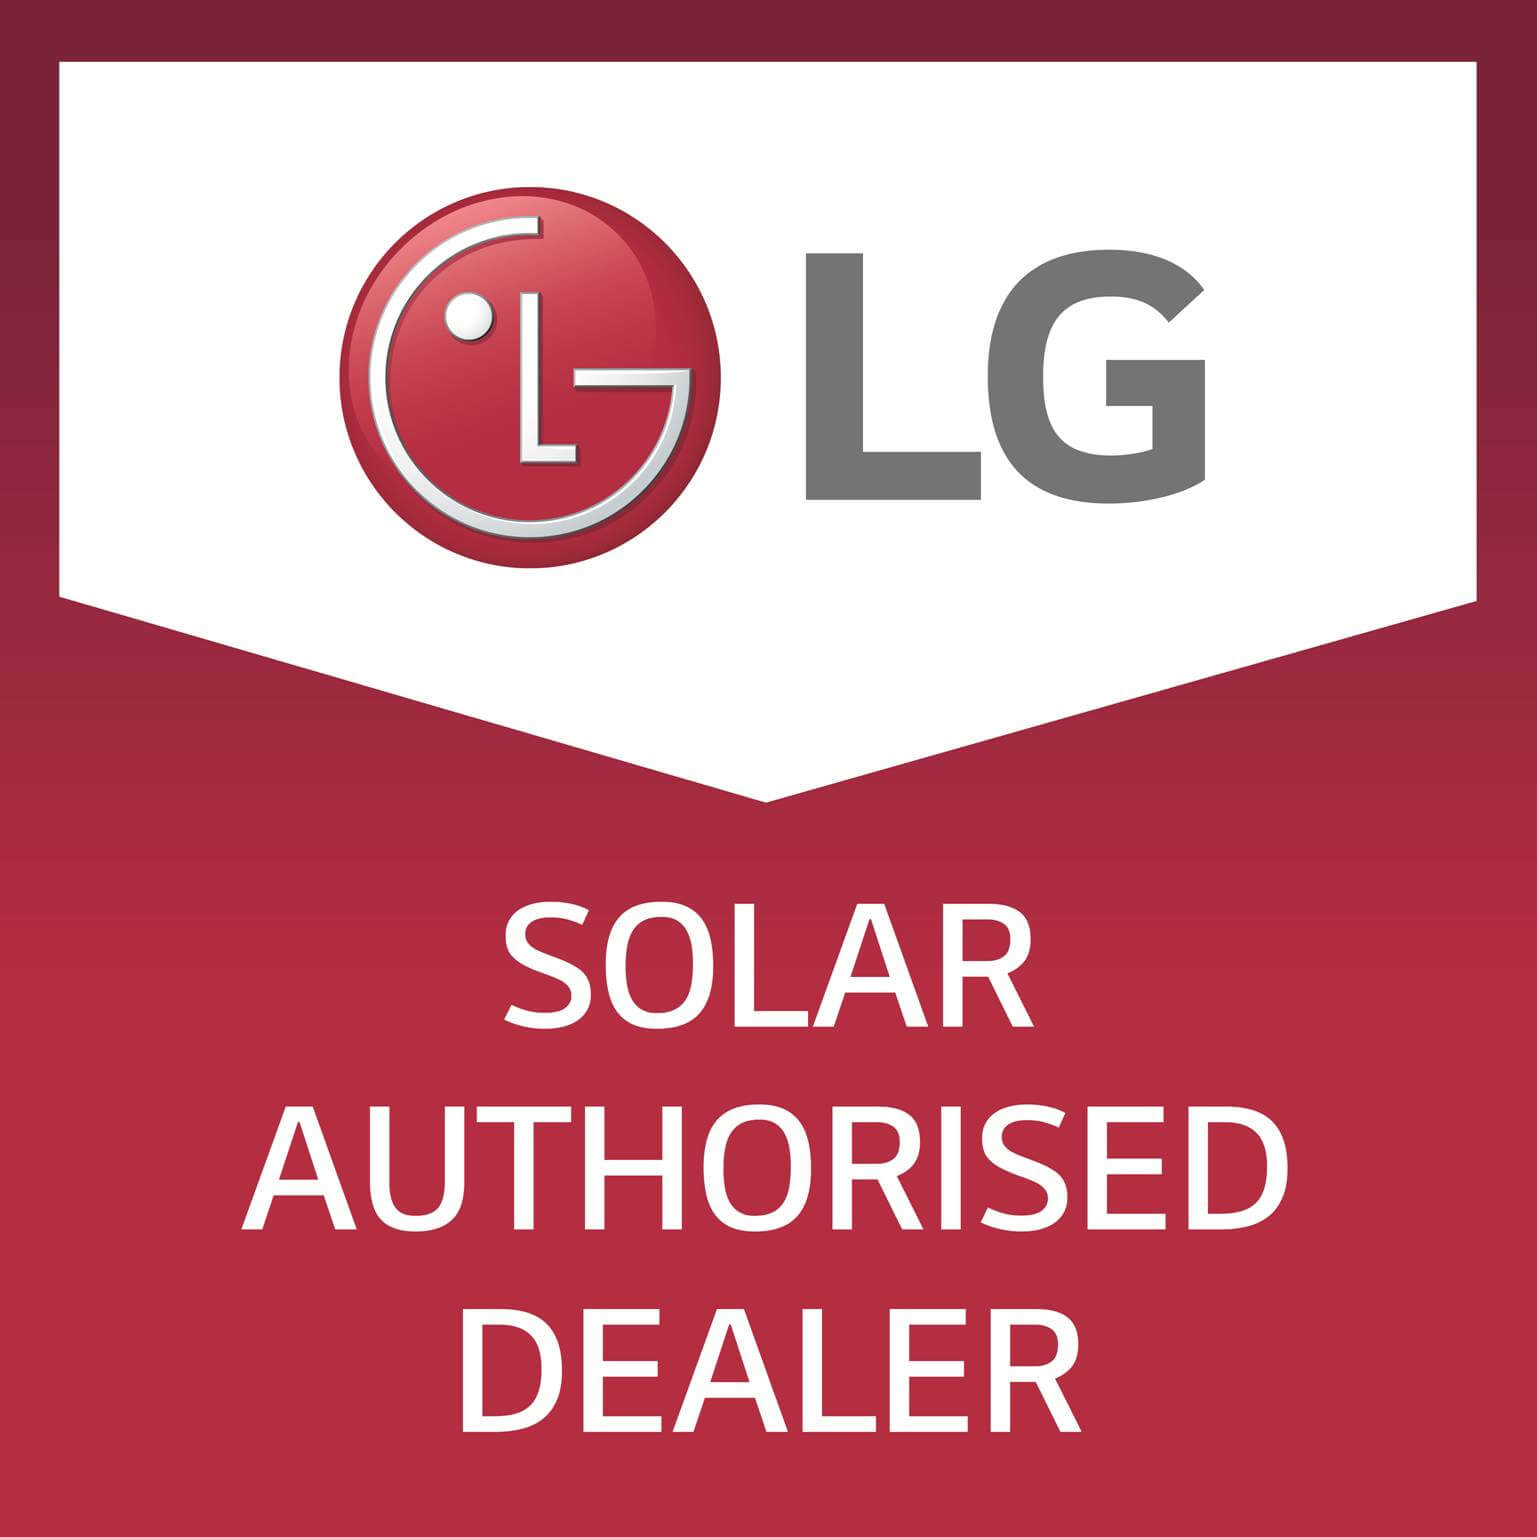 lg authorised dealer logo